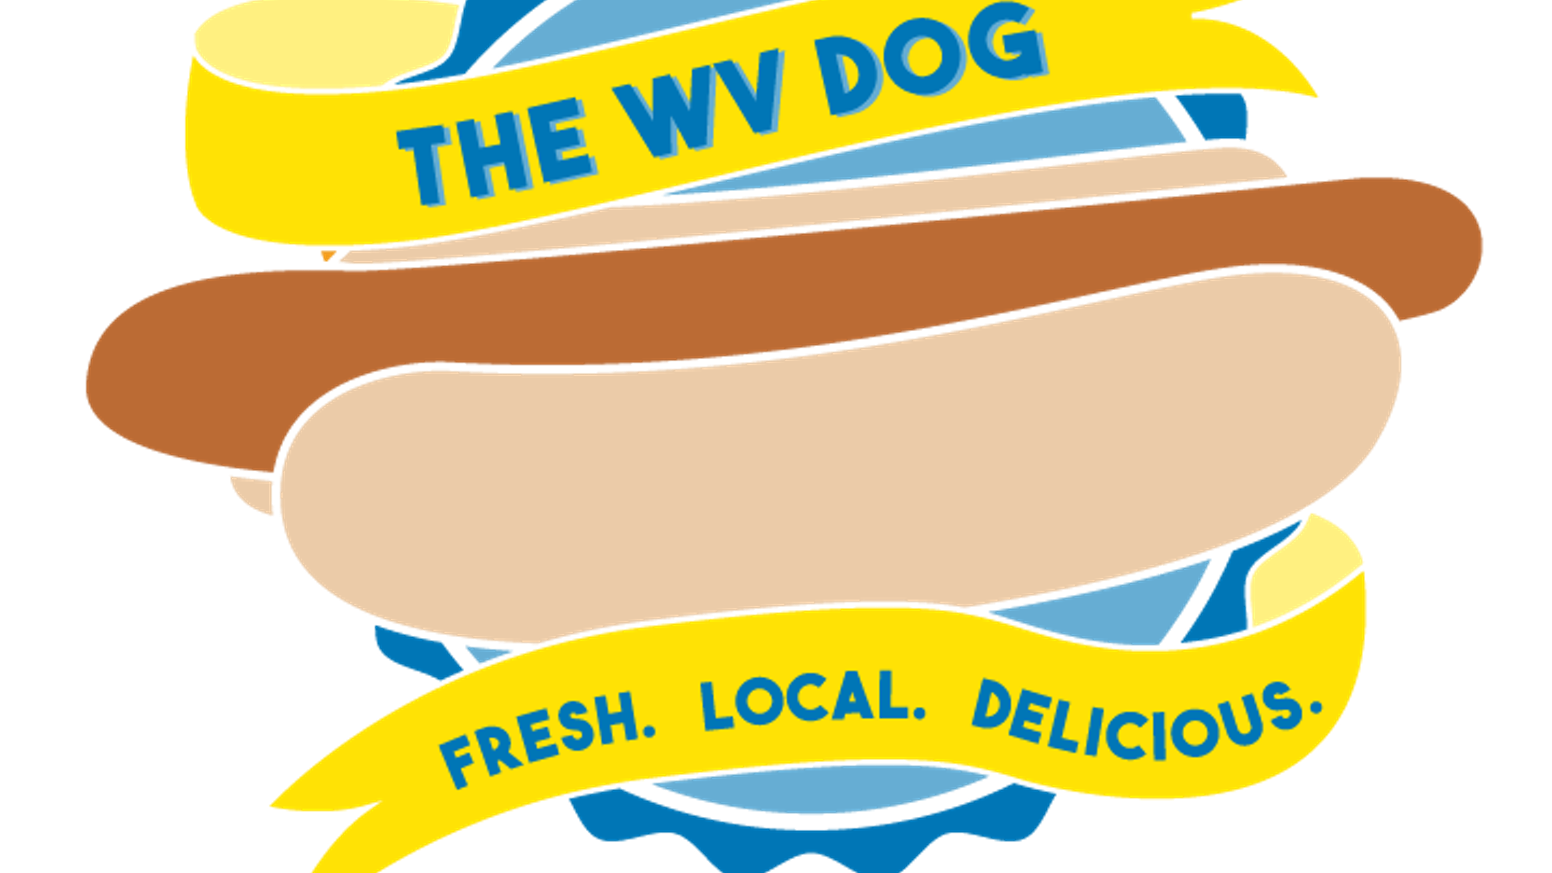 Clipart definition outreach. Hotdogs a west virginia